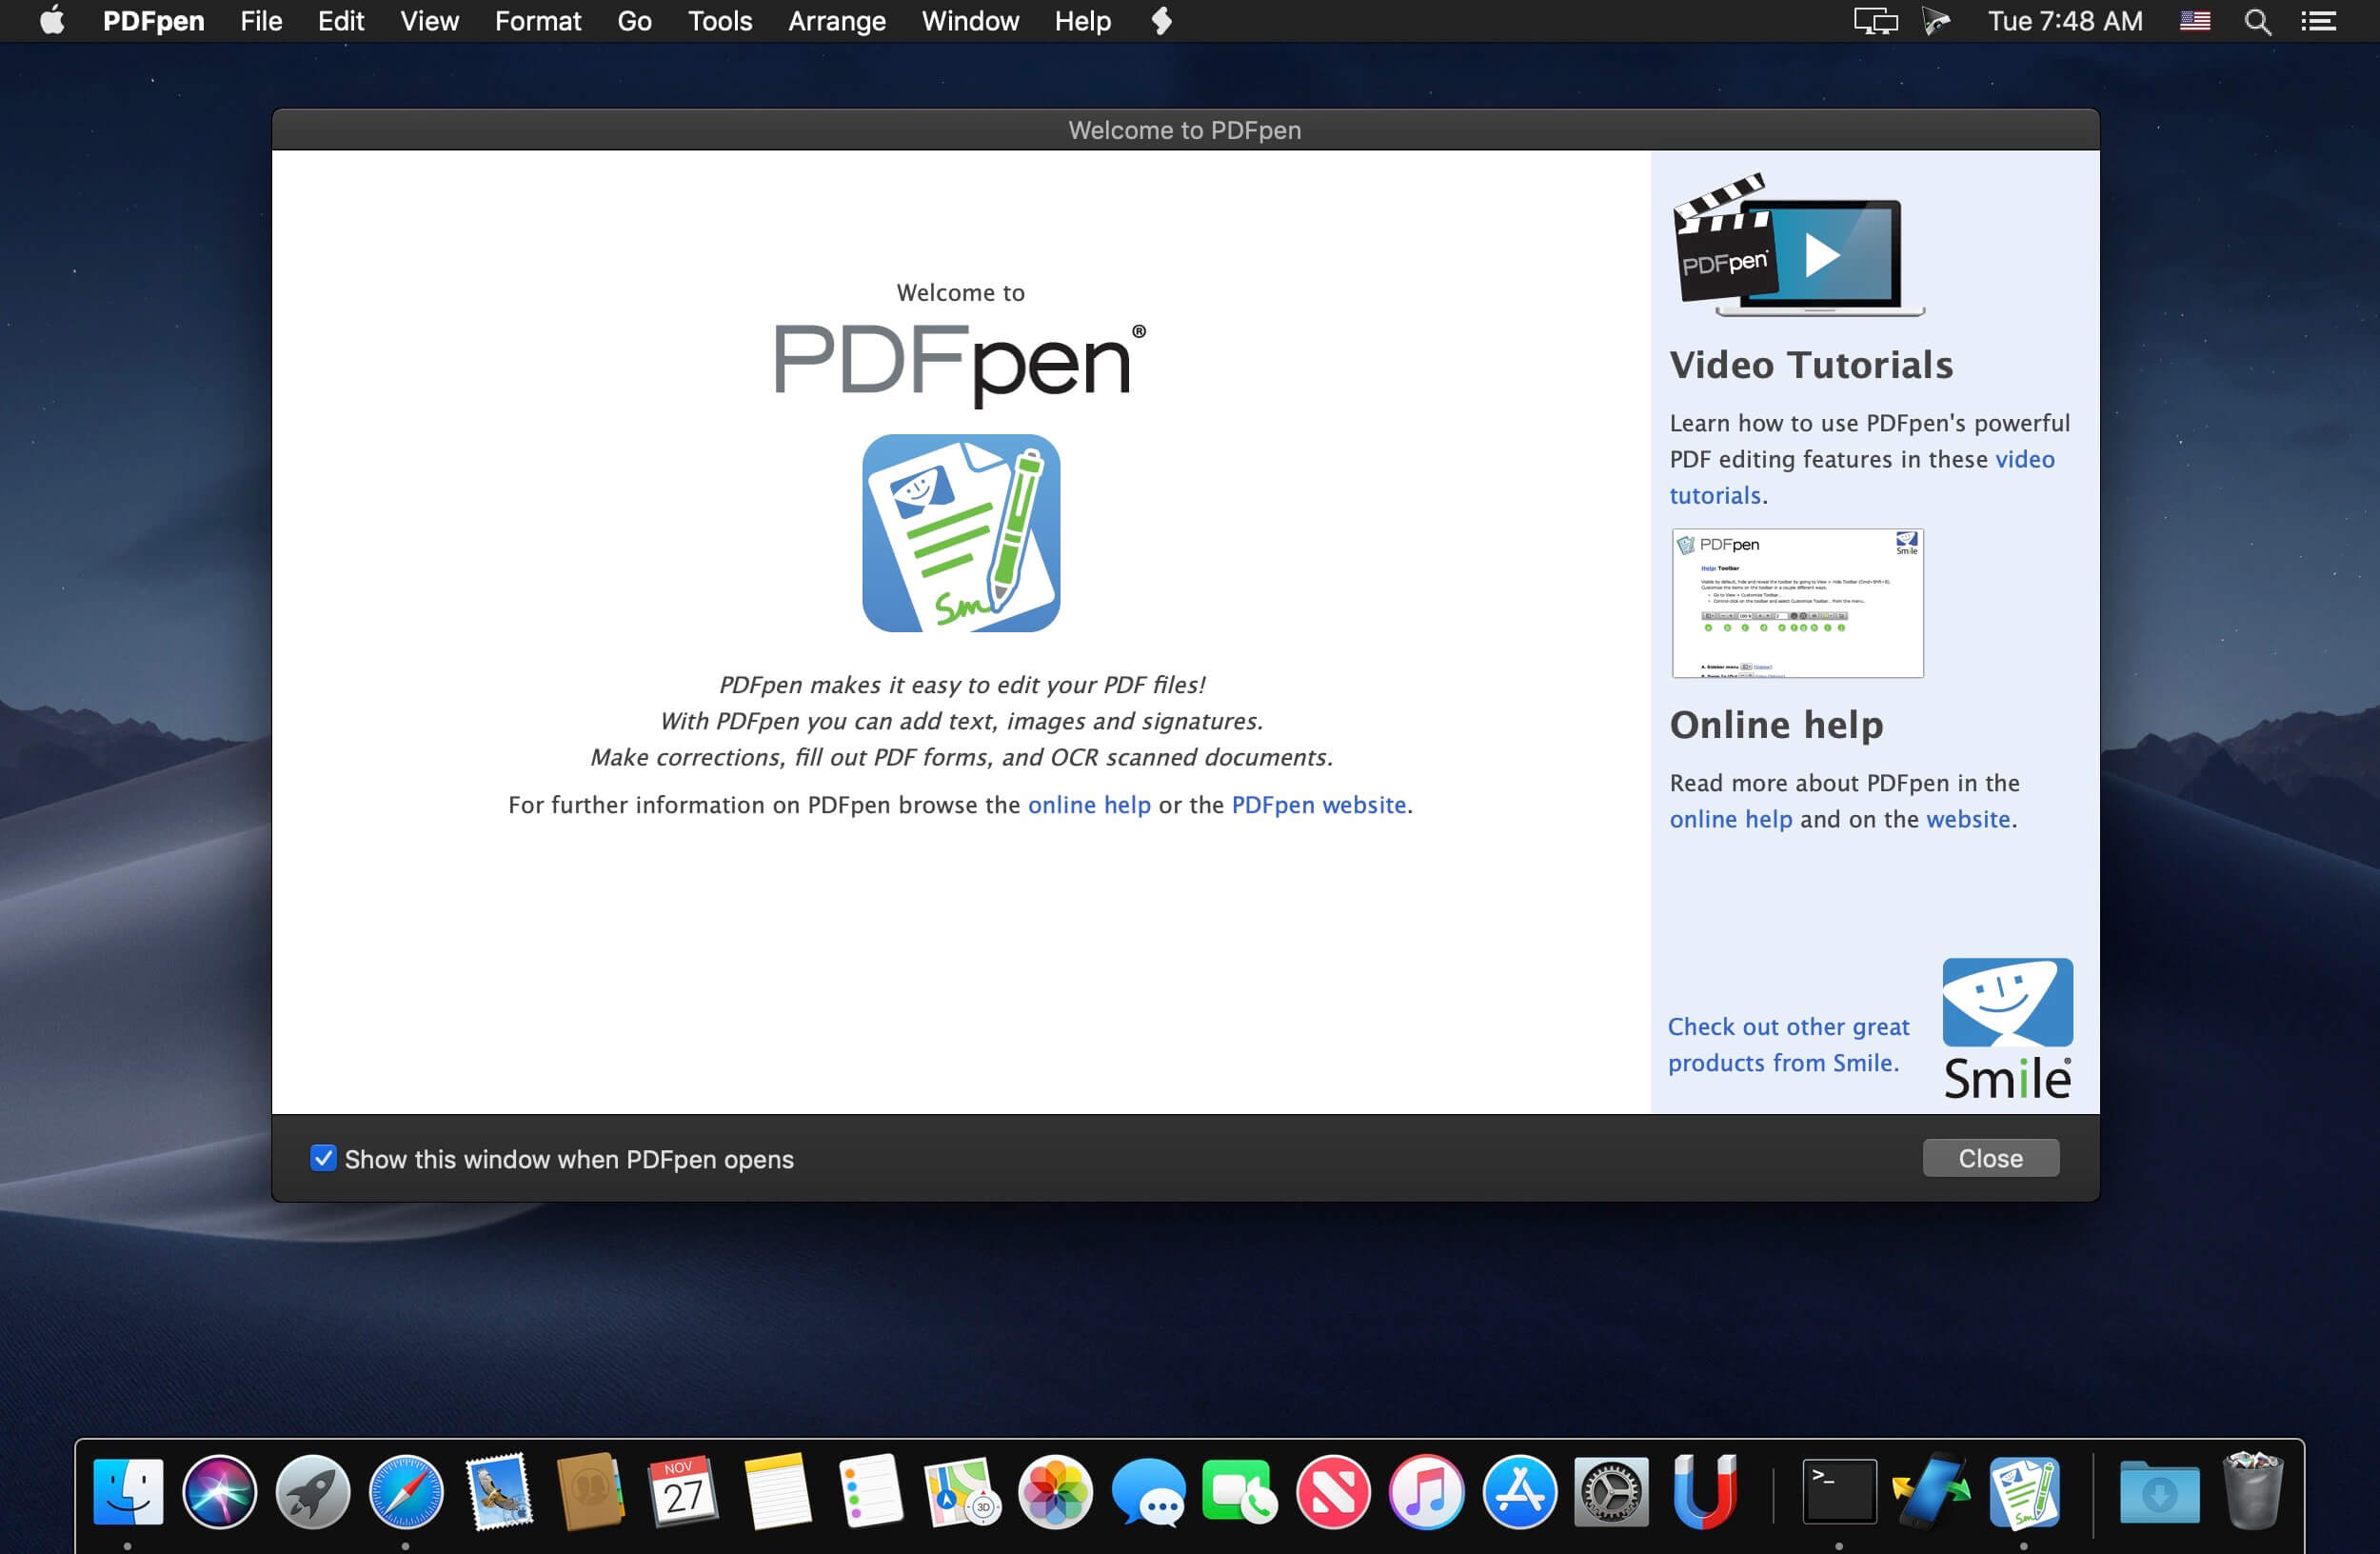 PDFpen 10.2 for Mac